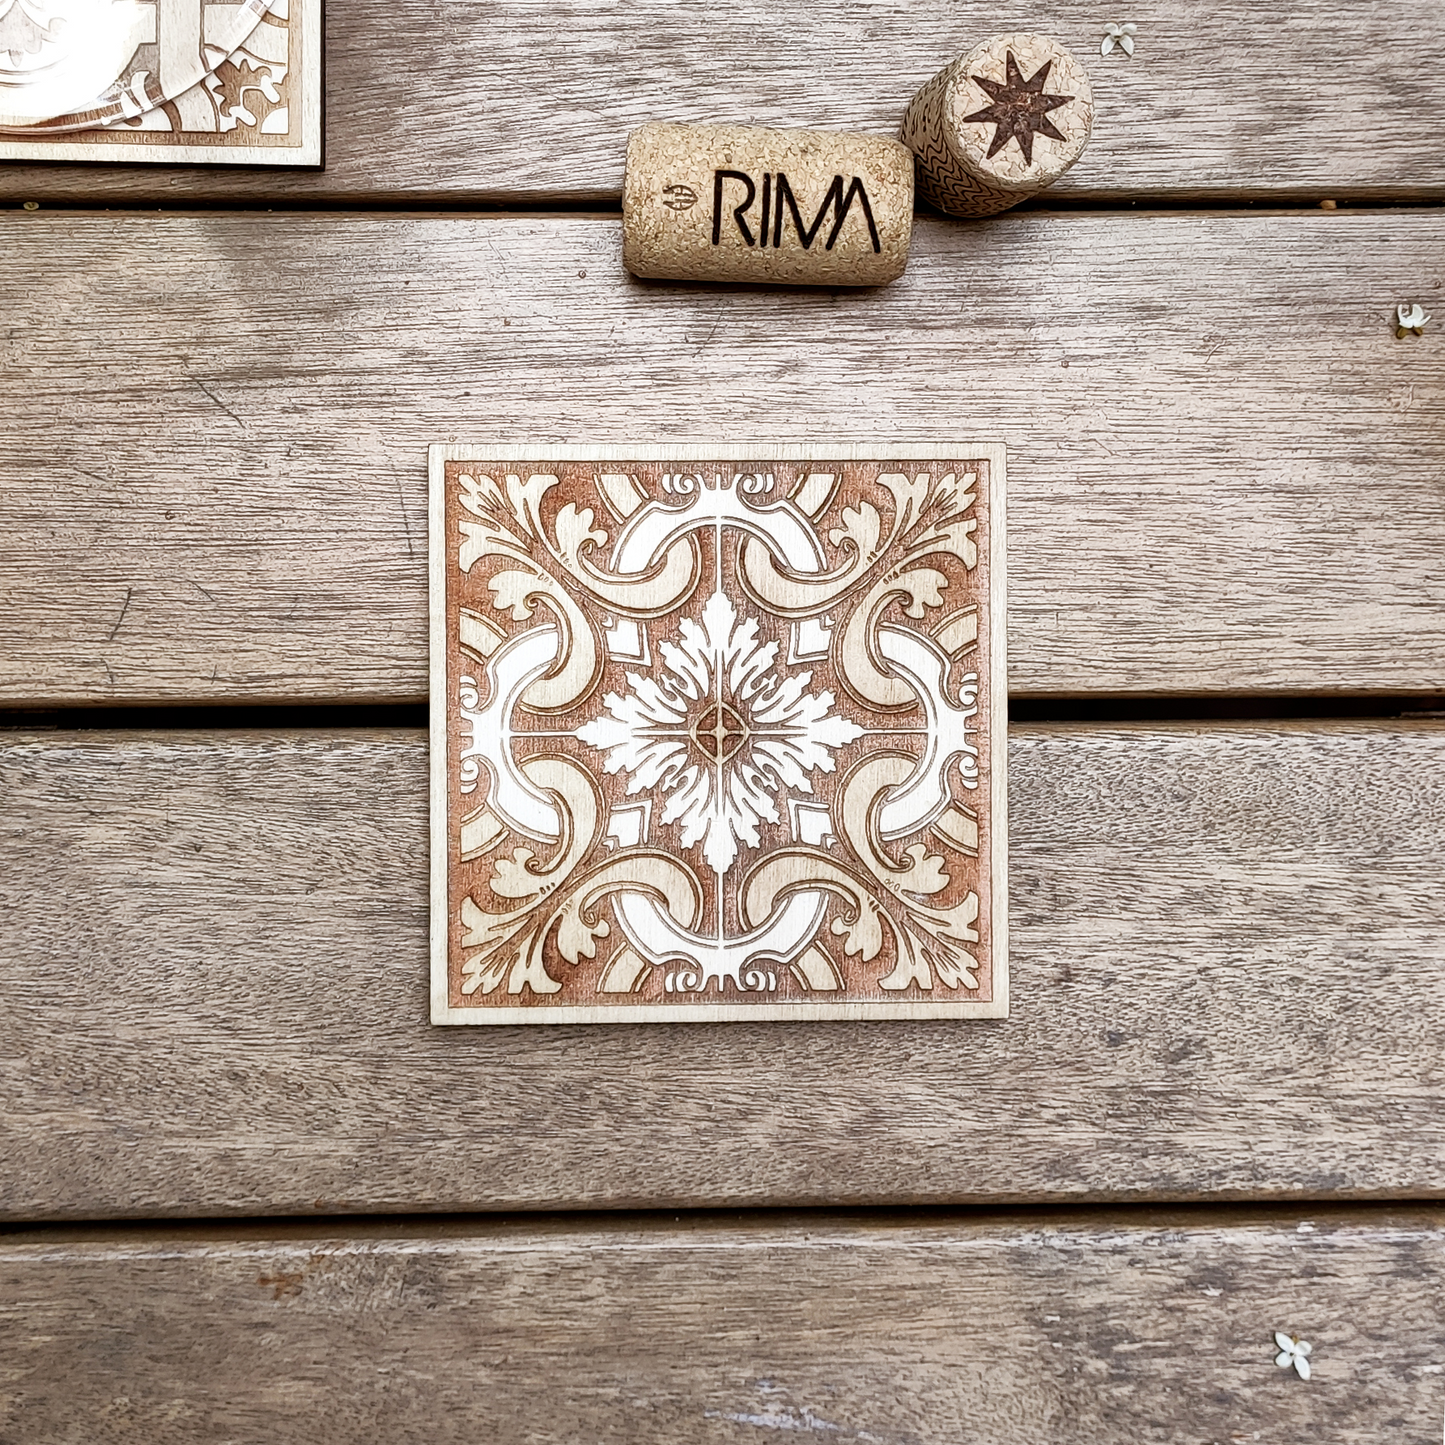 Set of 4 Portuguese Tiles Wood Coasters - Minimalism - Modern Coasters - Cup Holders